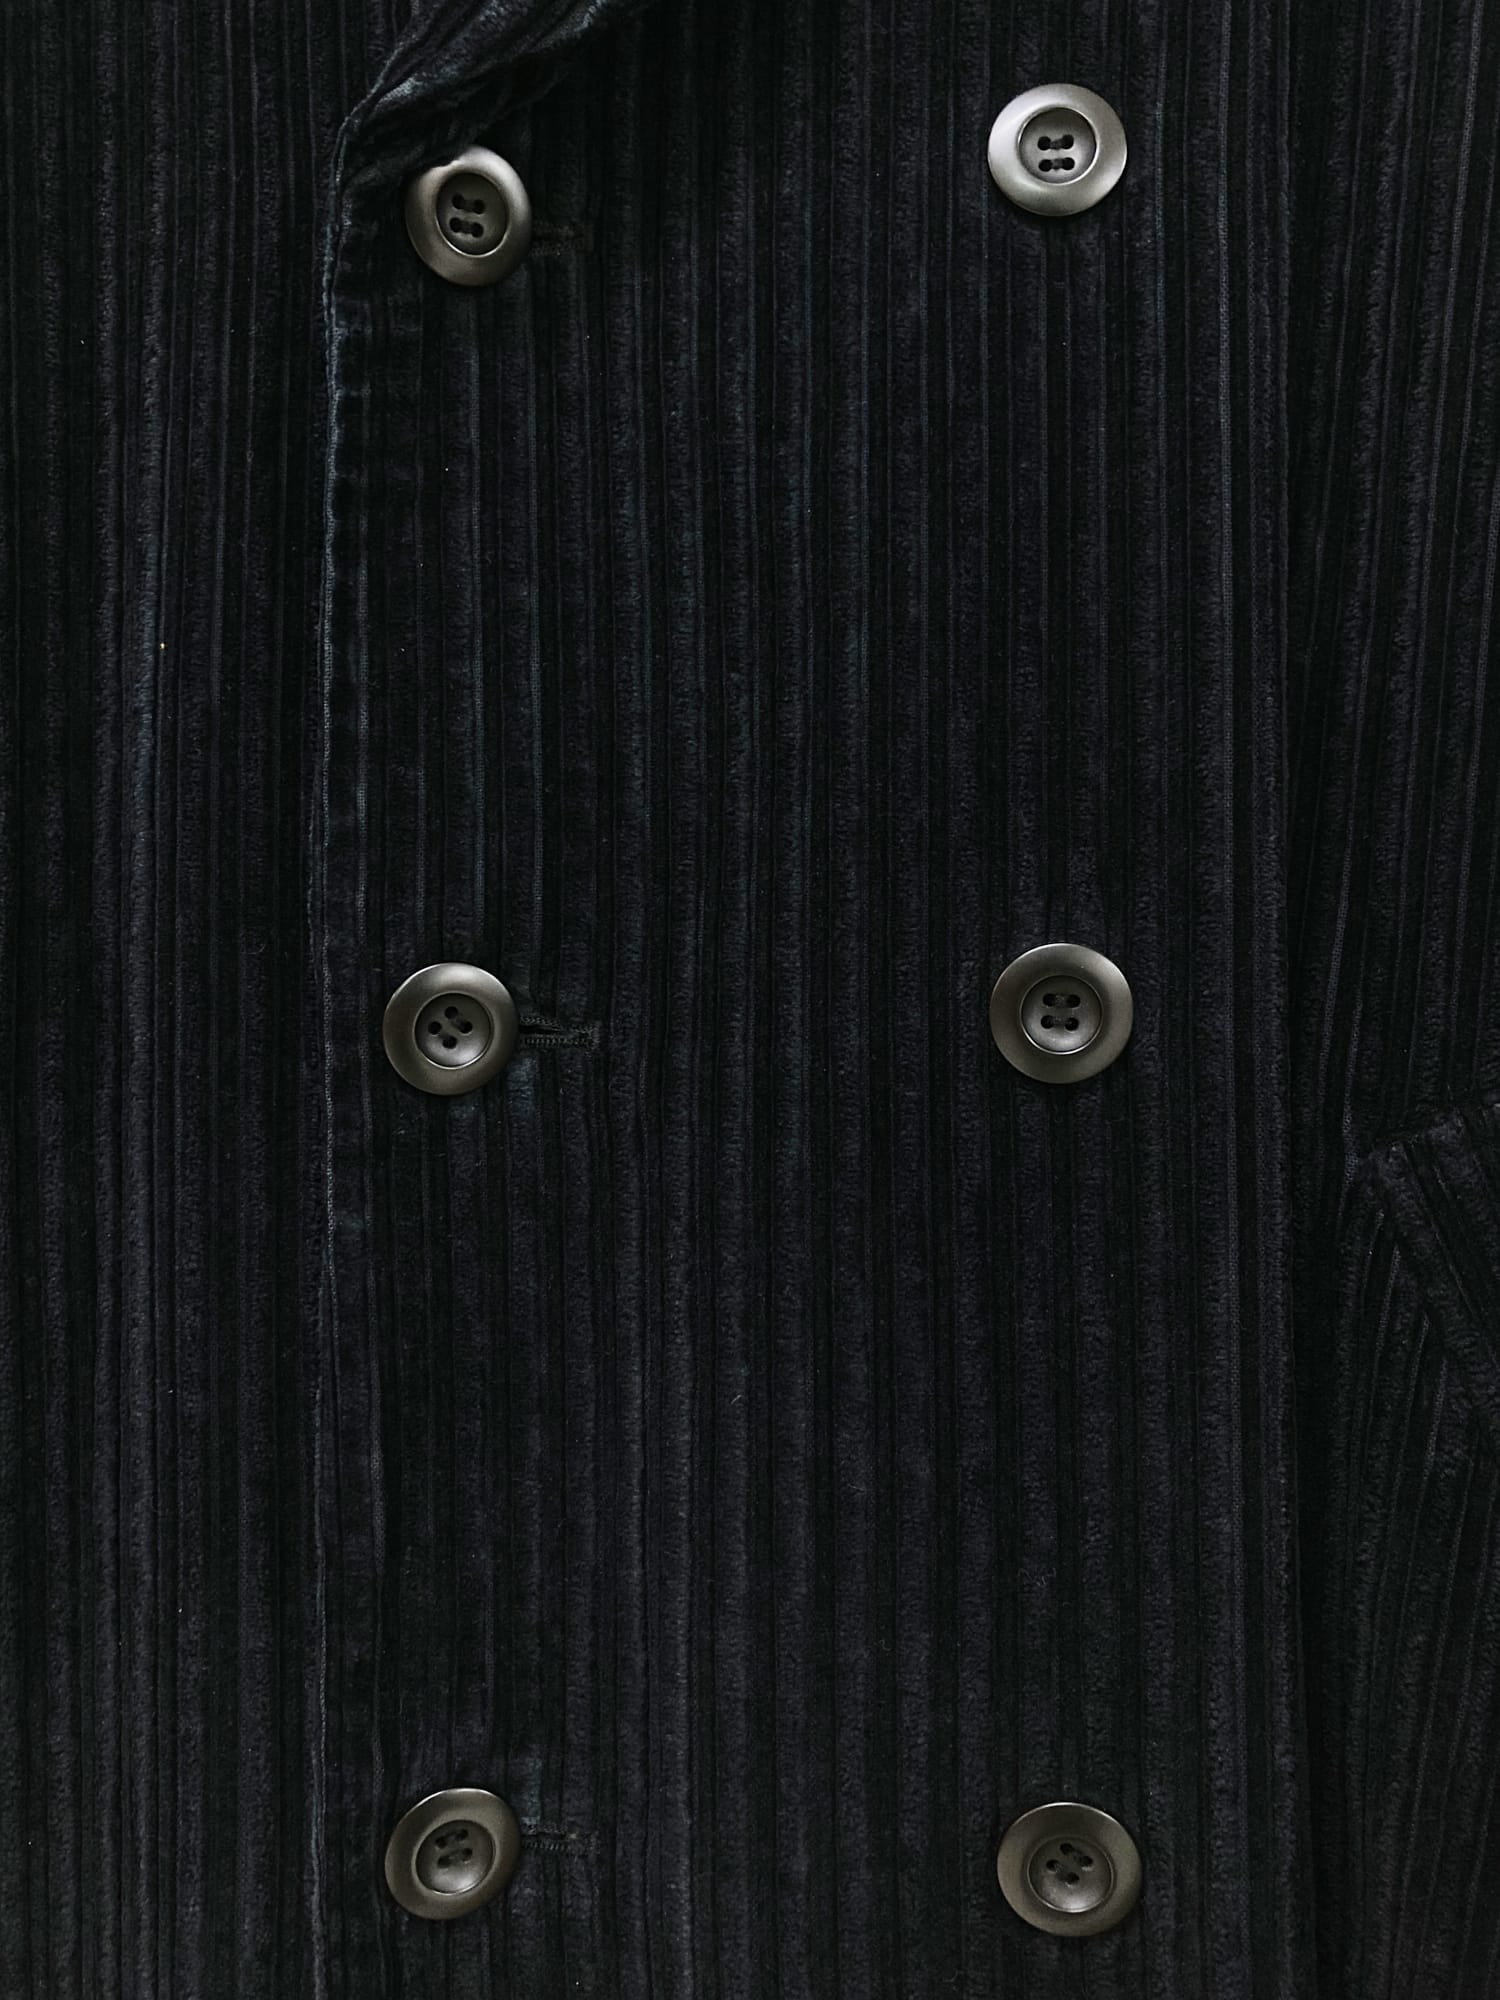 Pashu Shin Hosokawa 1980s black cotton corduroy double breasted coat - M